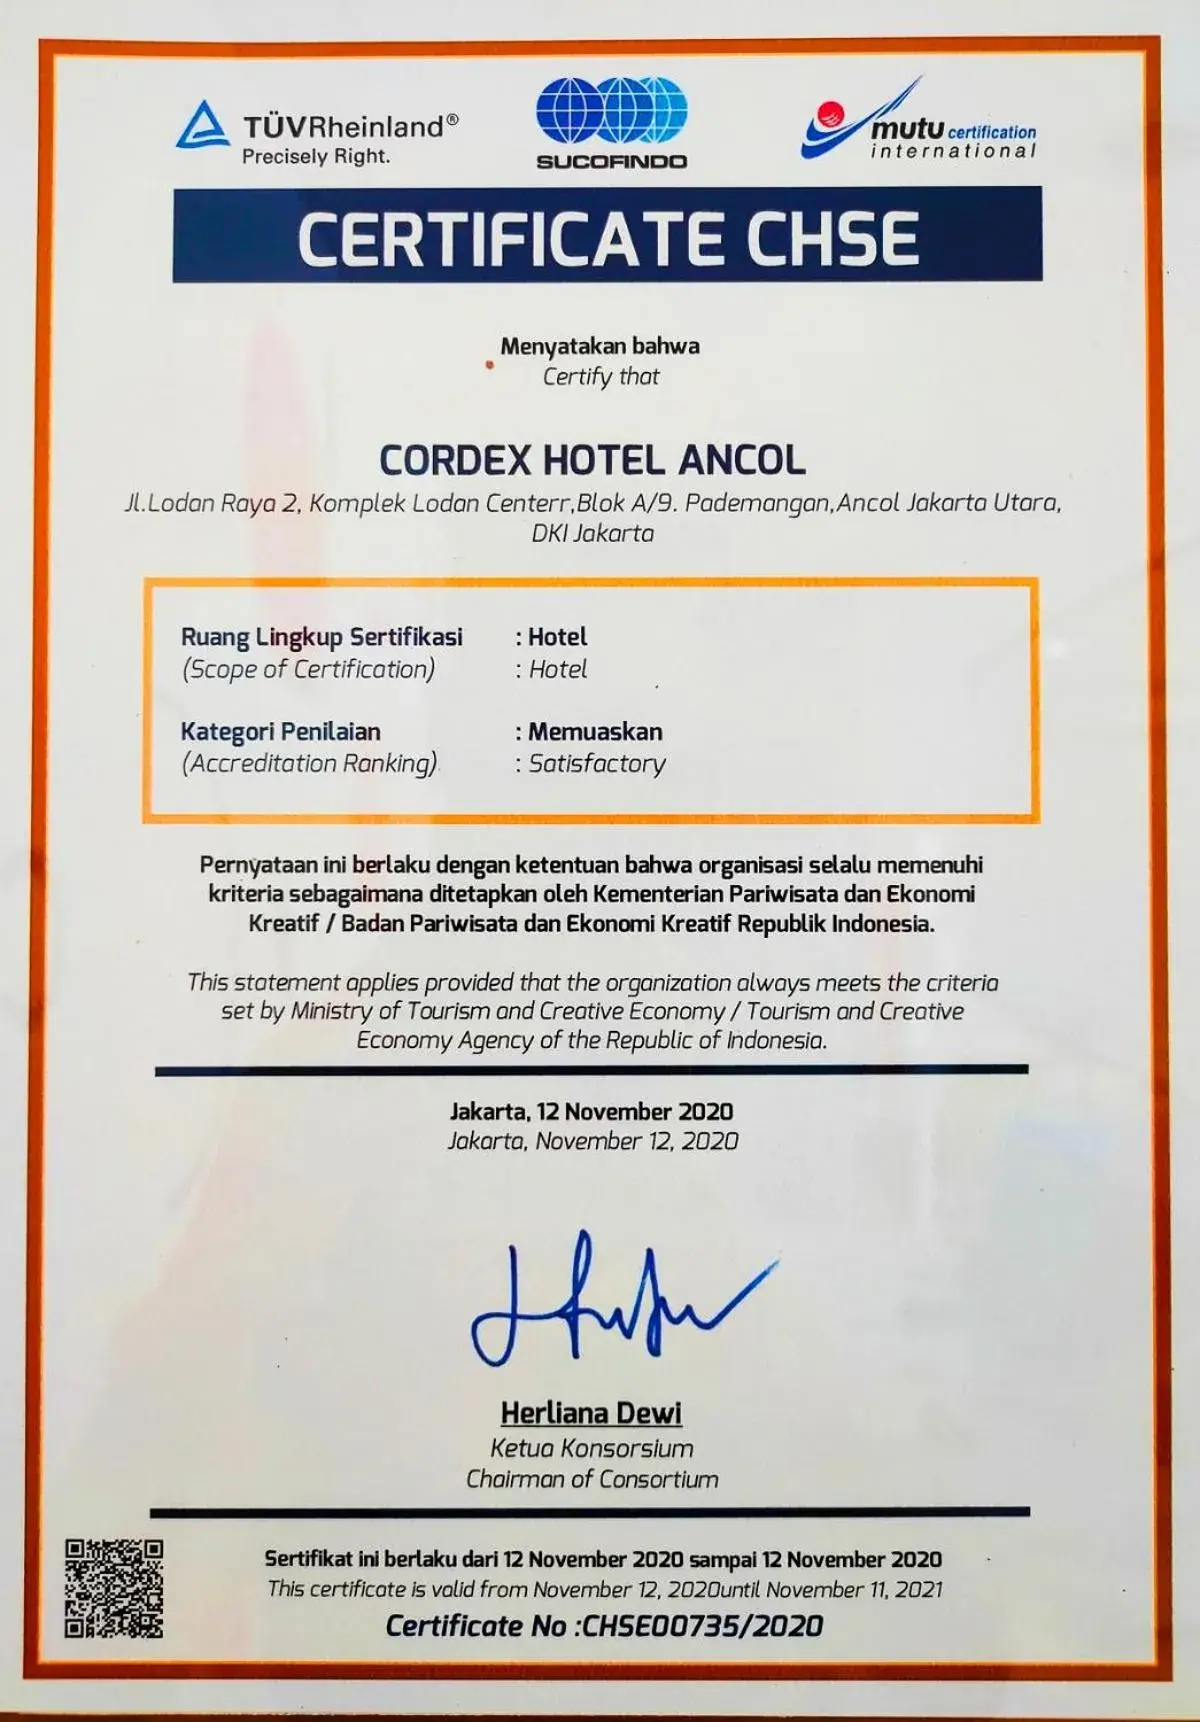 Logo/Certificate/Sign in Cordex Hotel Ancol